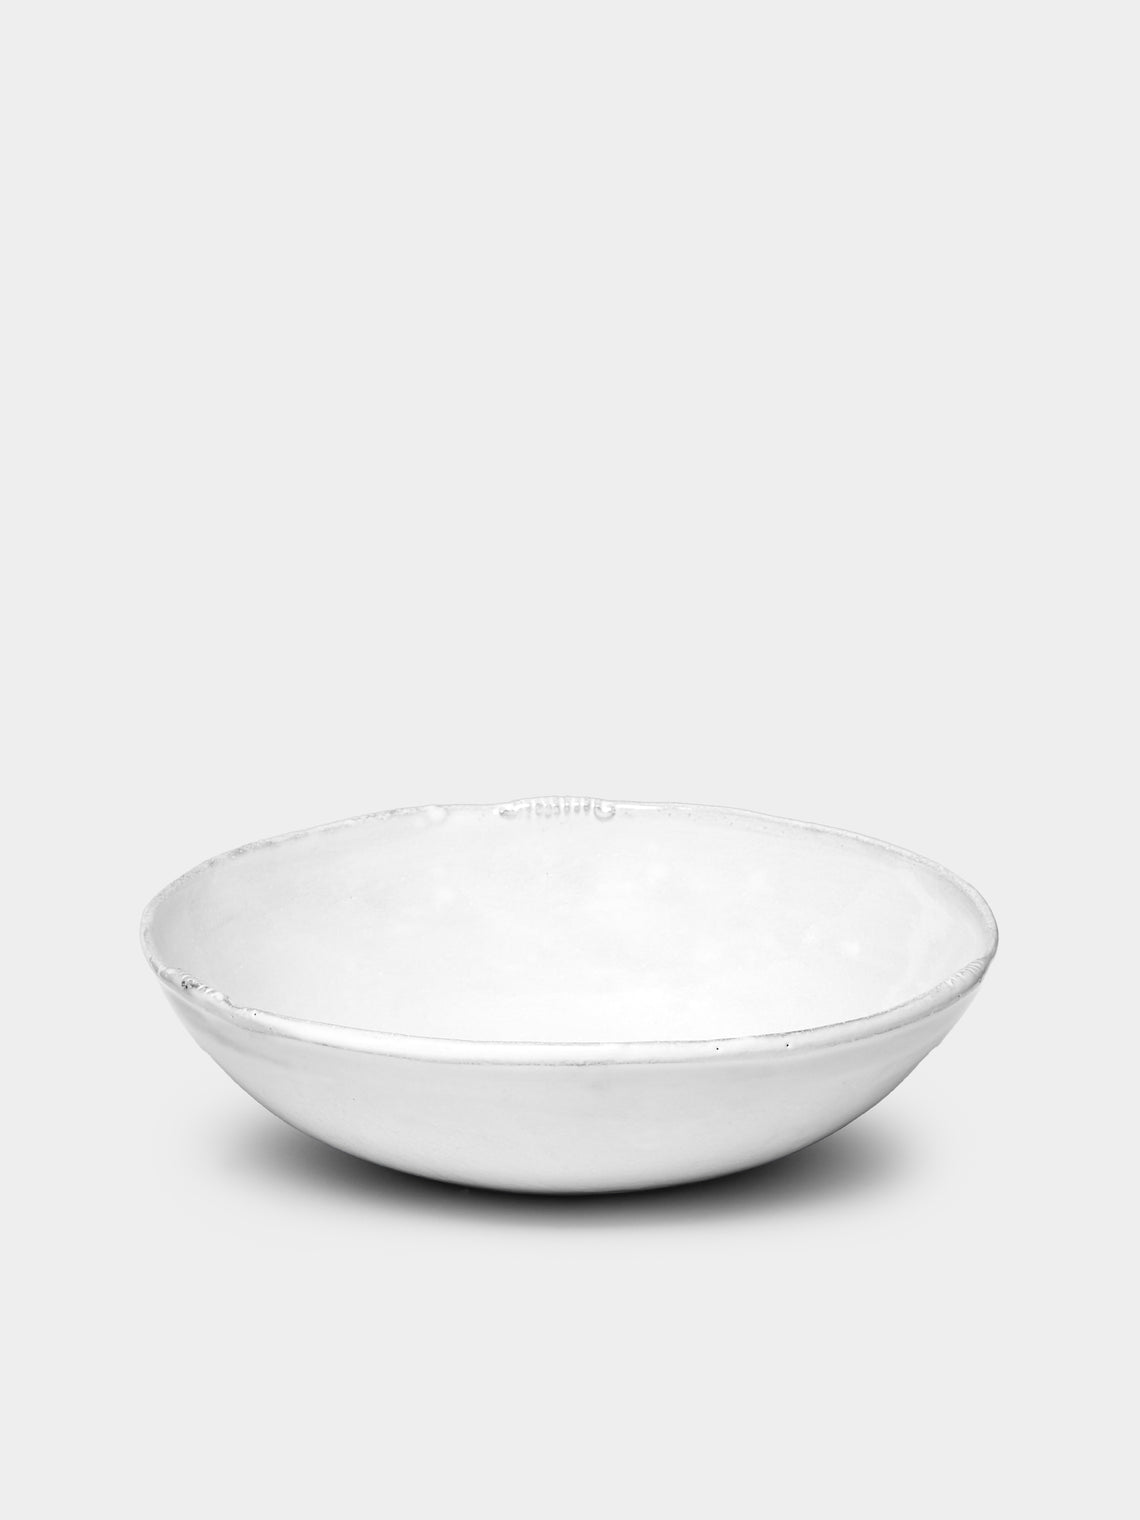 Astier de Villatte - Neptune Soup Plate -  - ABASK - 